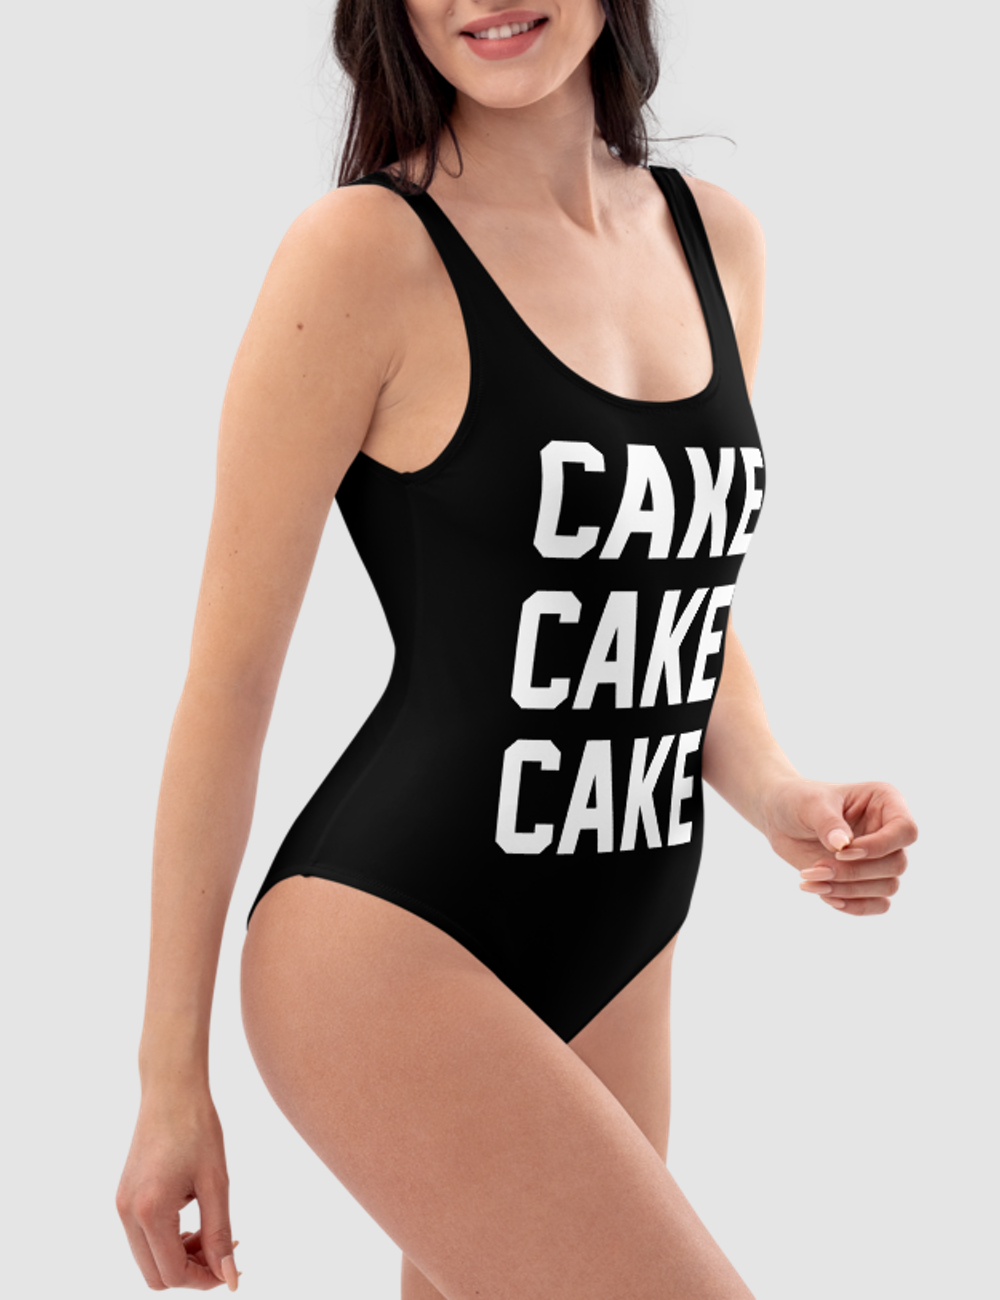 Cake Cake Cake | Women's One-Piece Swimsuit OniTakai